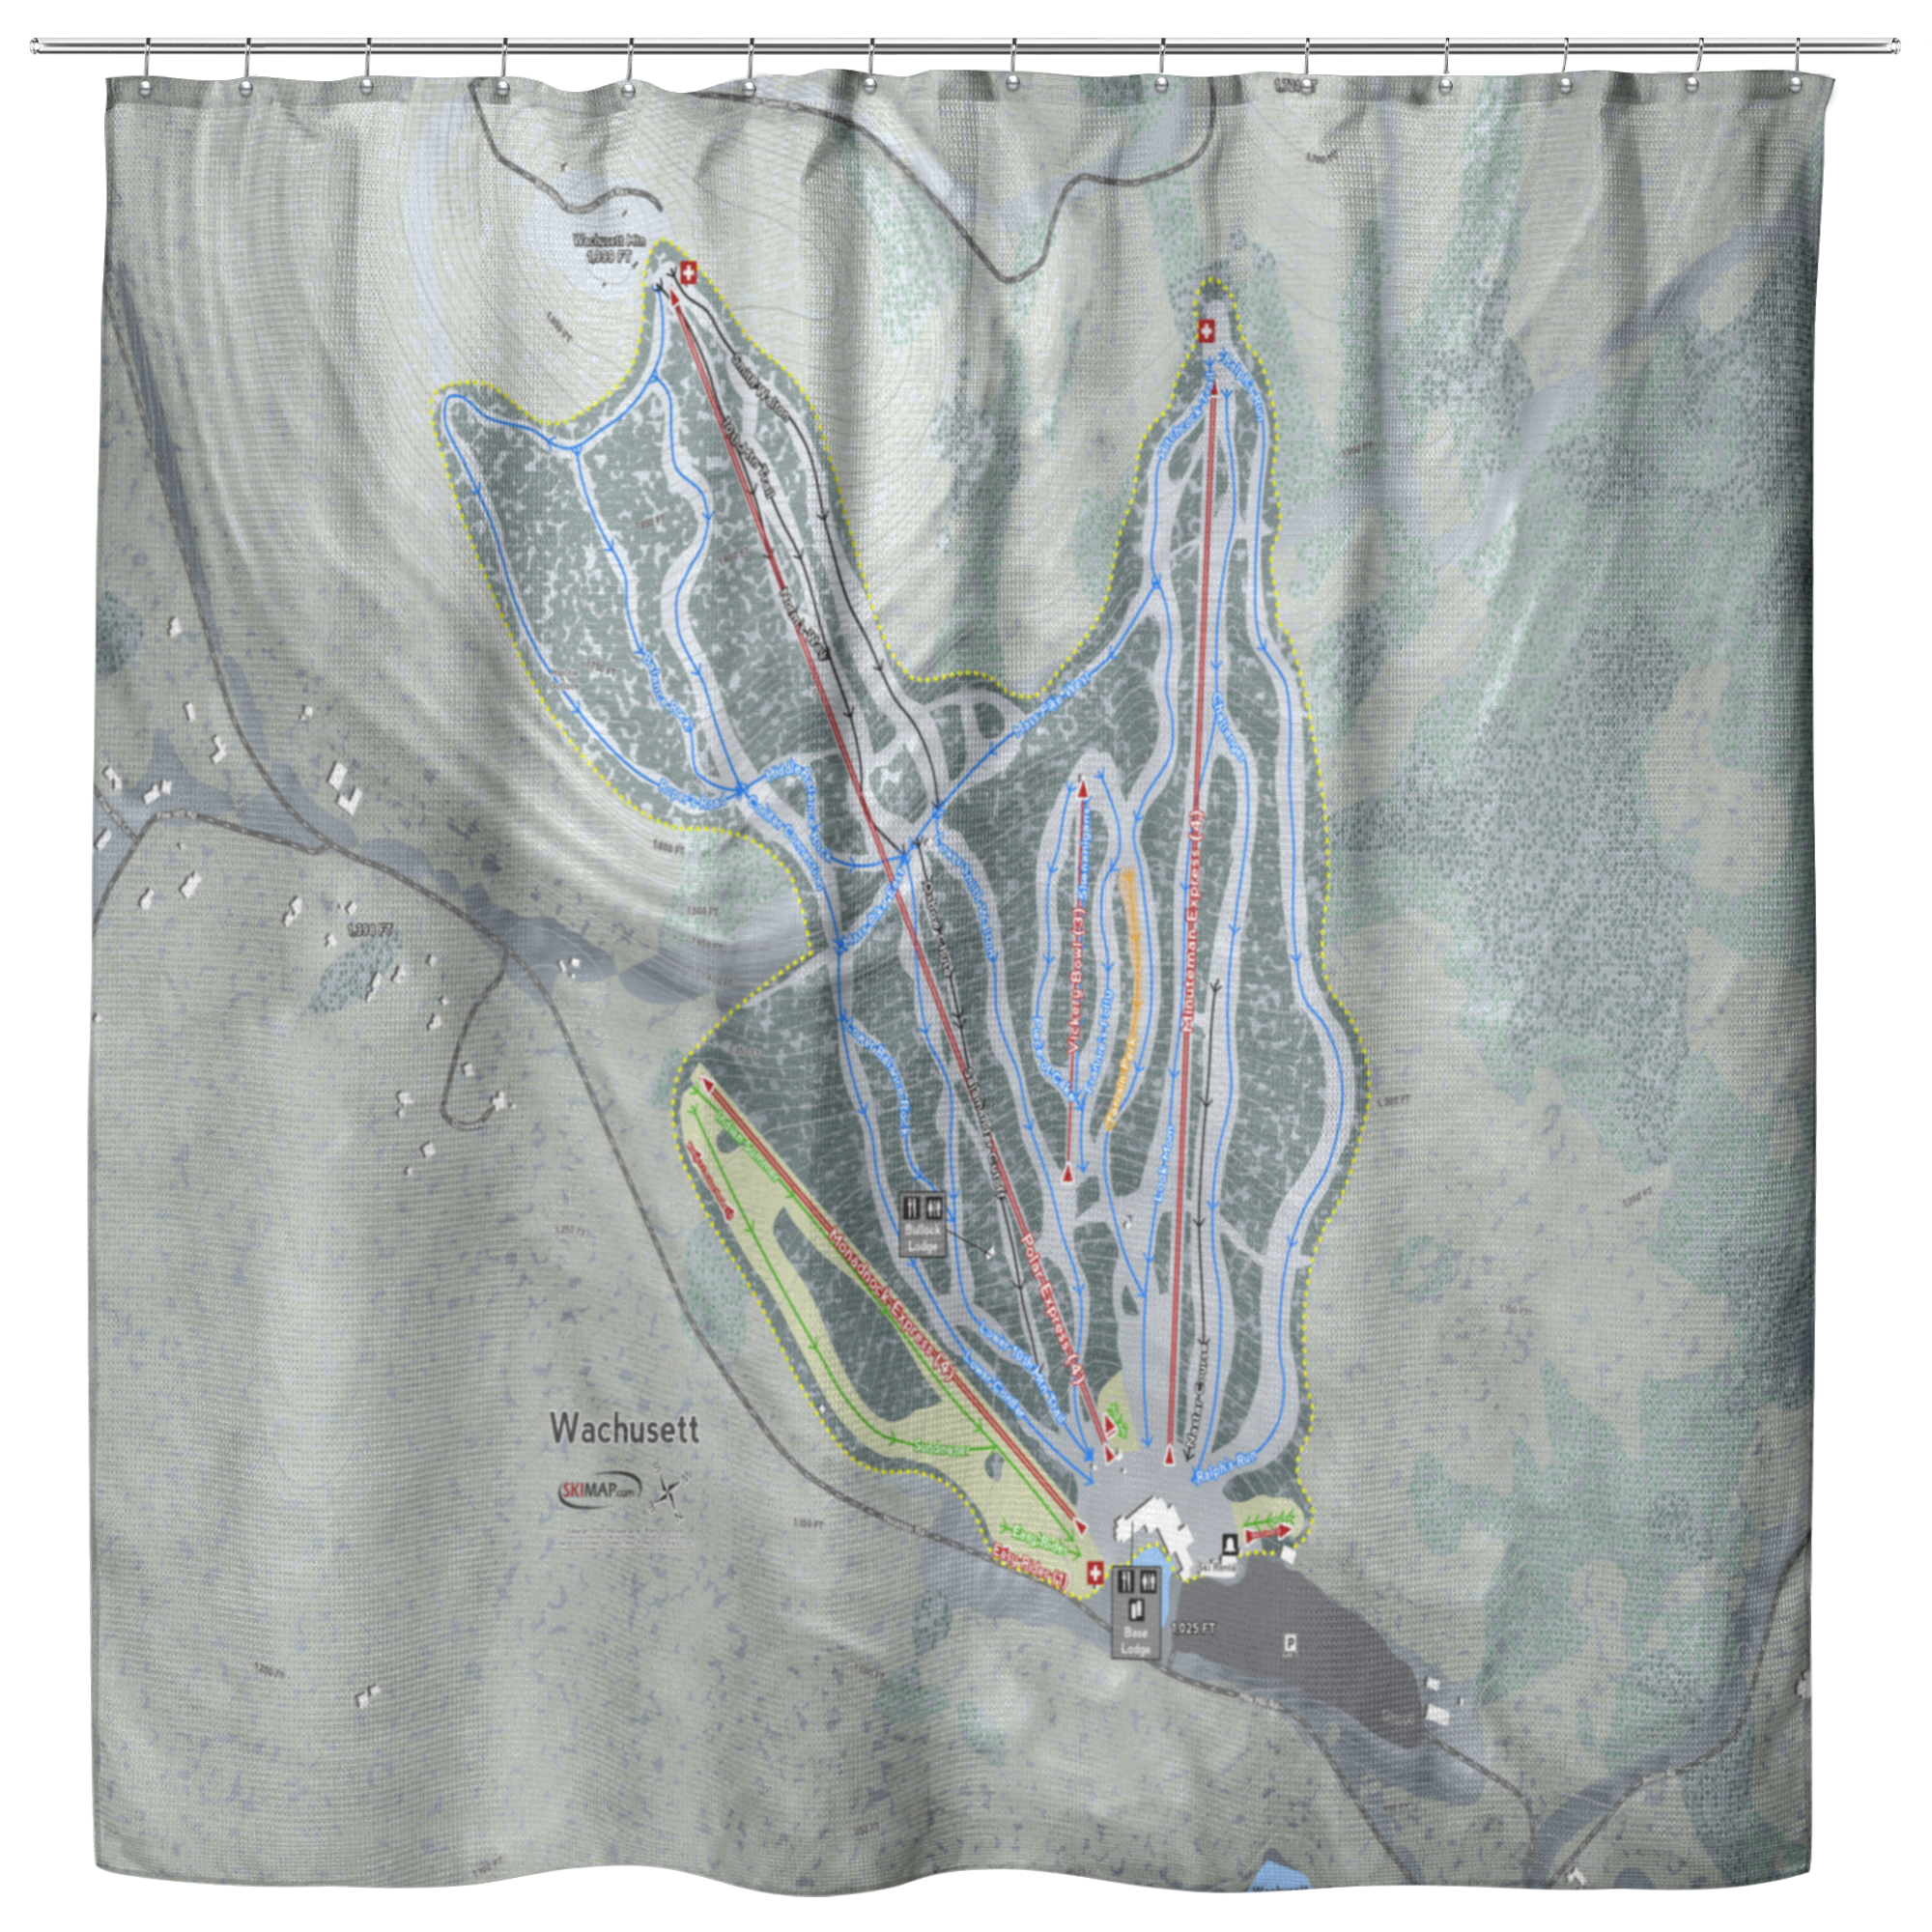 Wachusett Ski Trail Map Shower Curtain - Powderaddicts